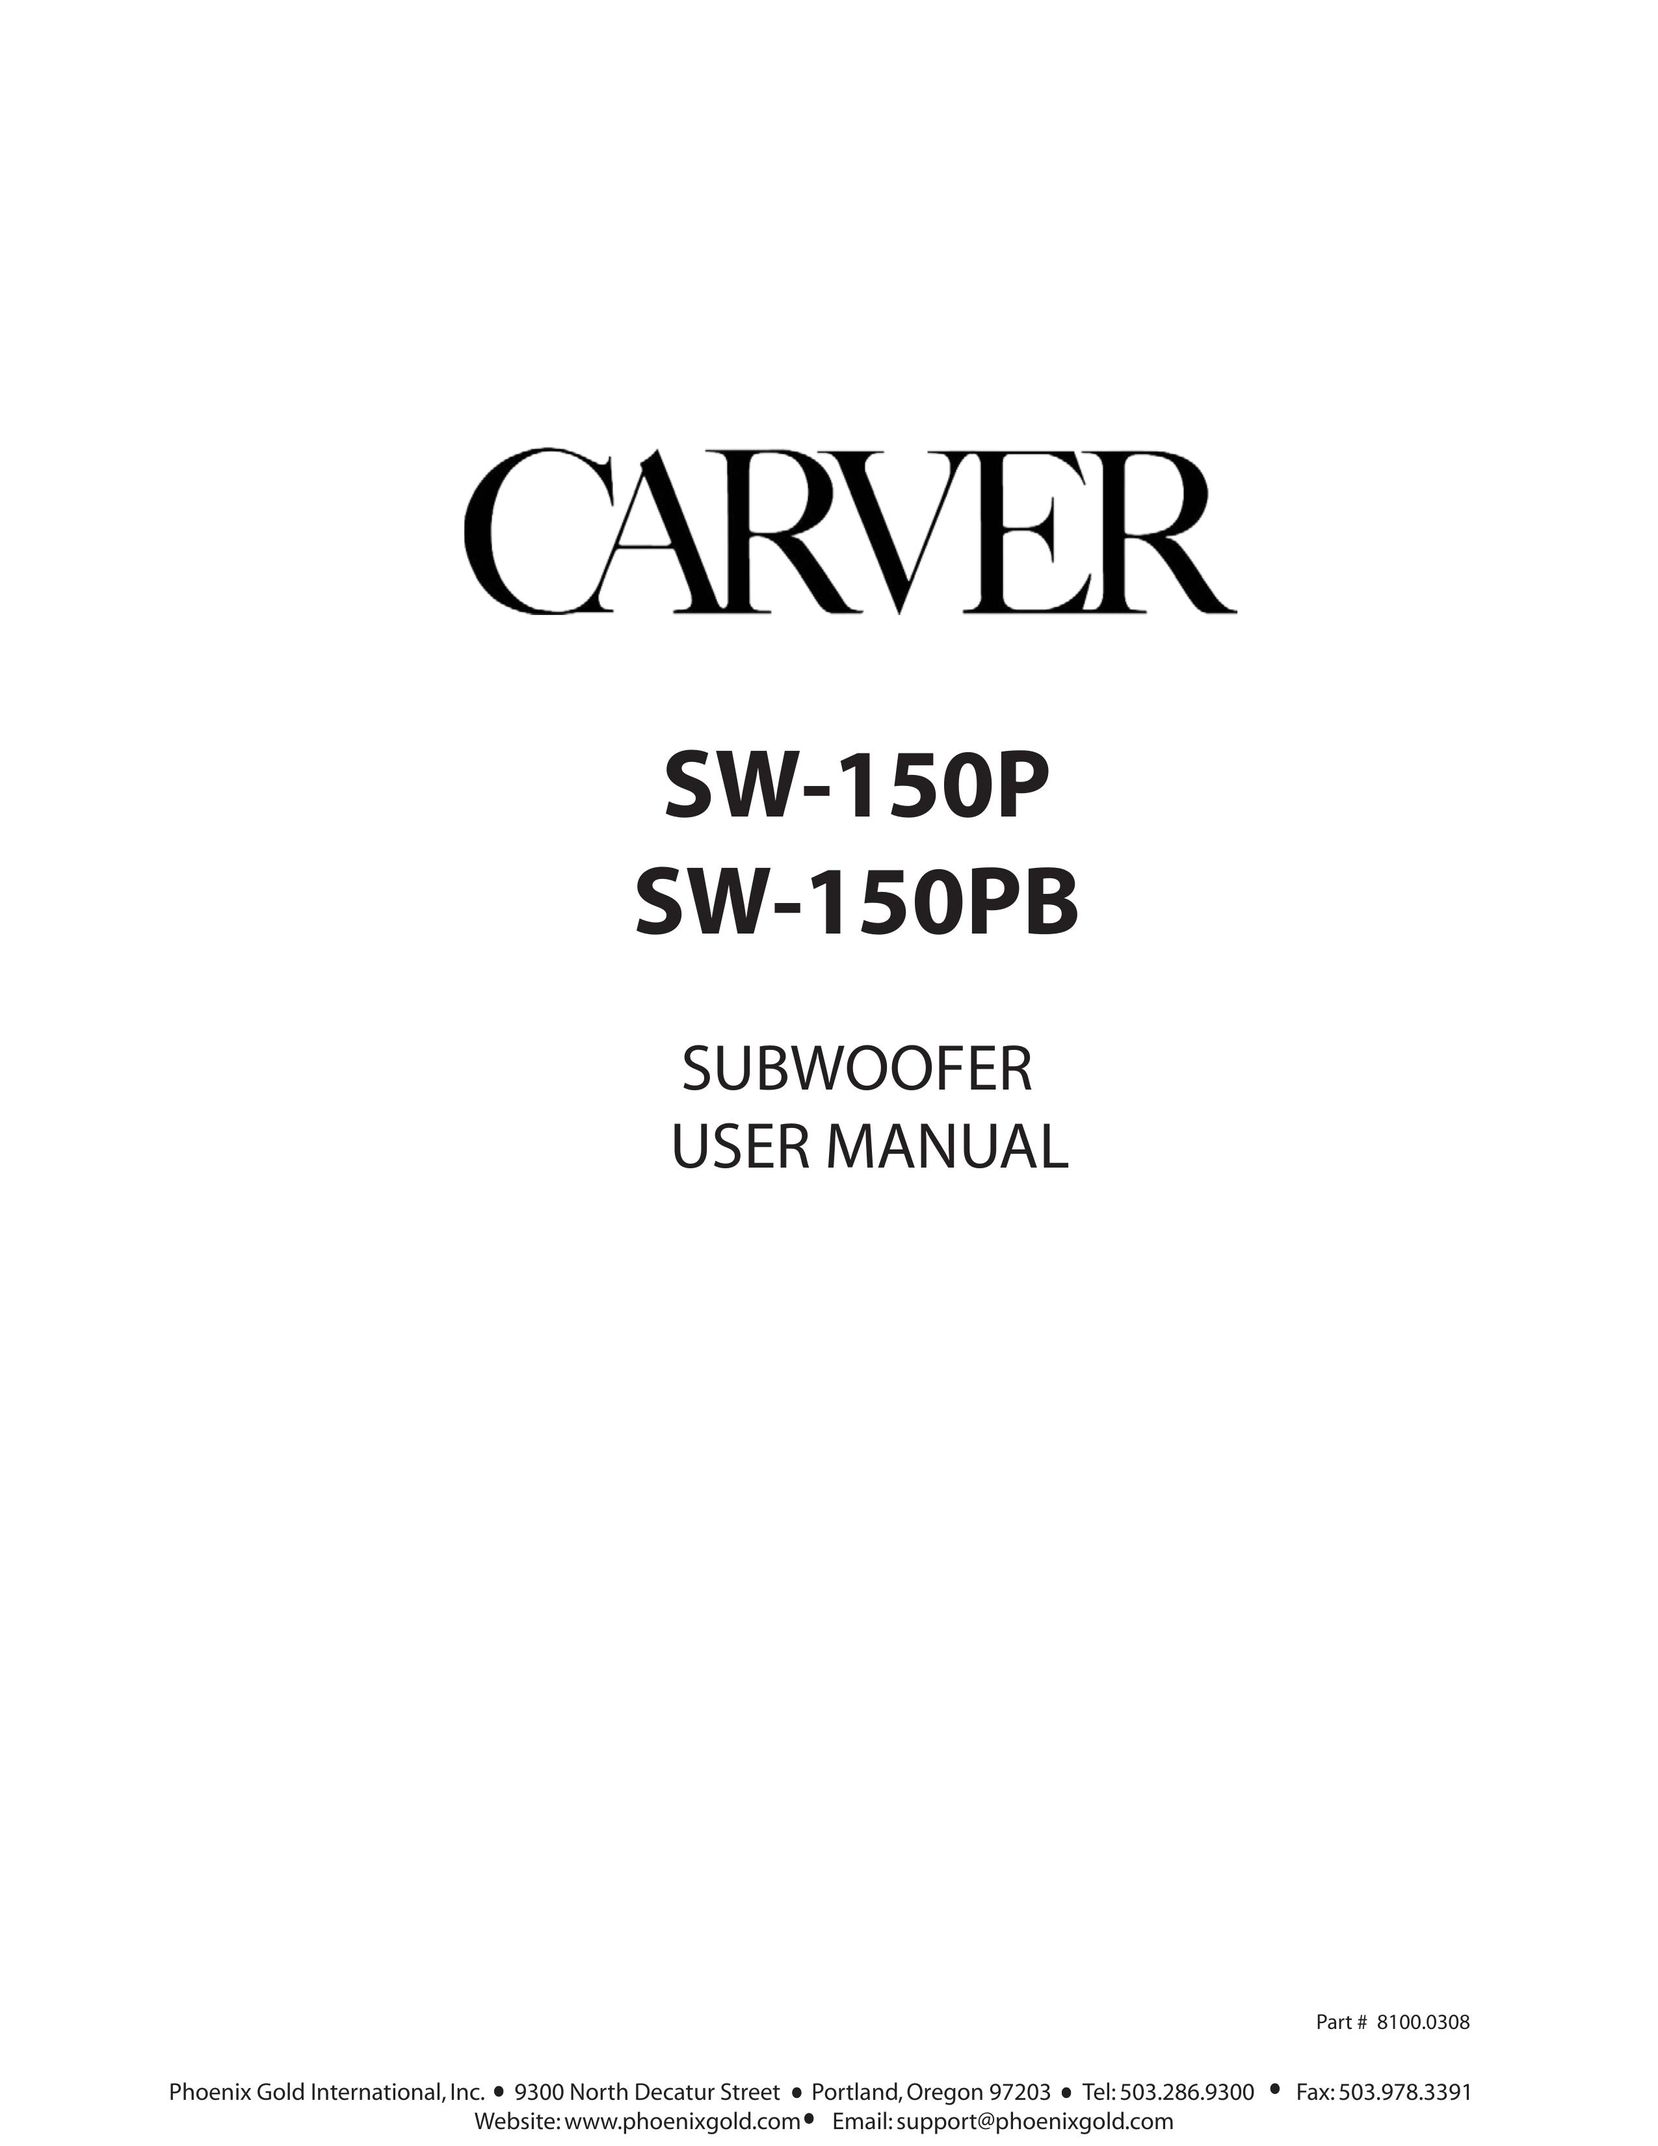 Carver sw-150p Speaker System User Manual